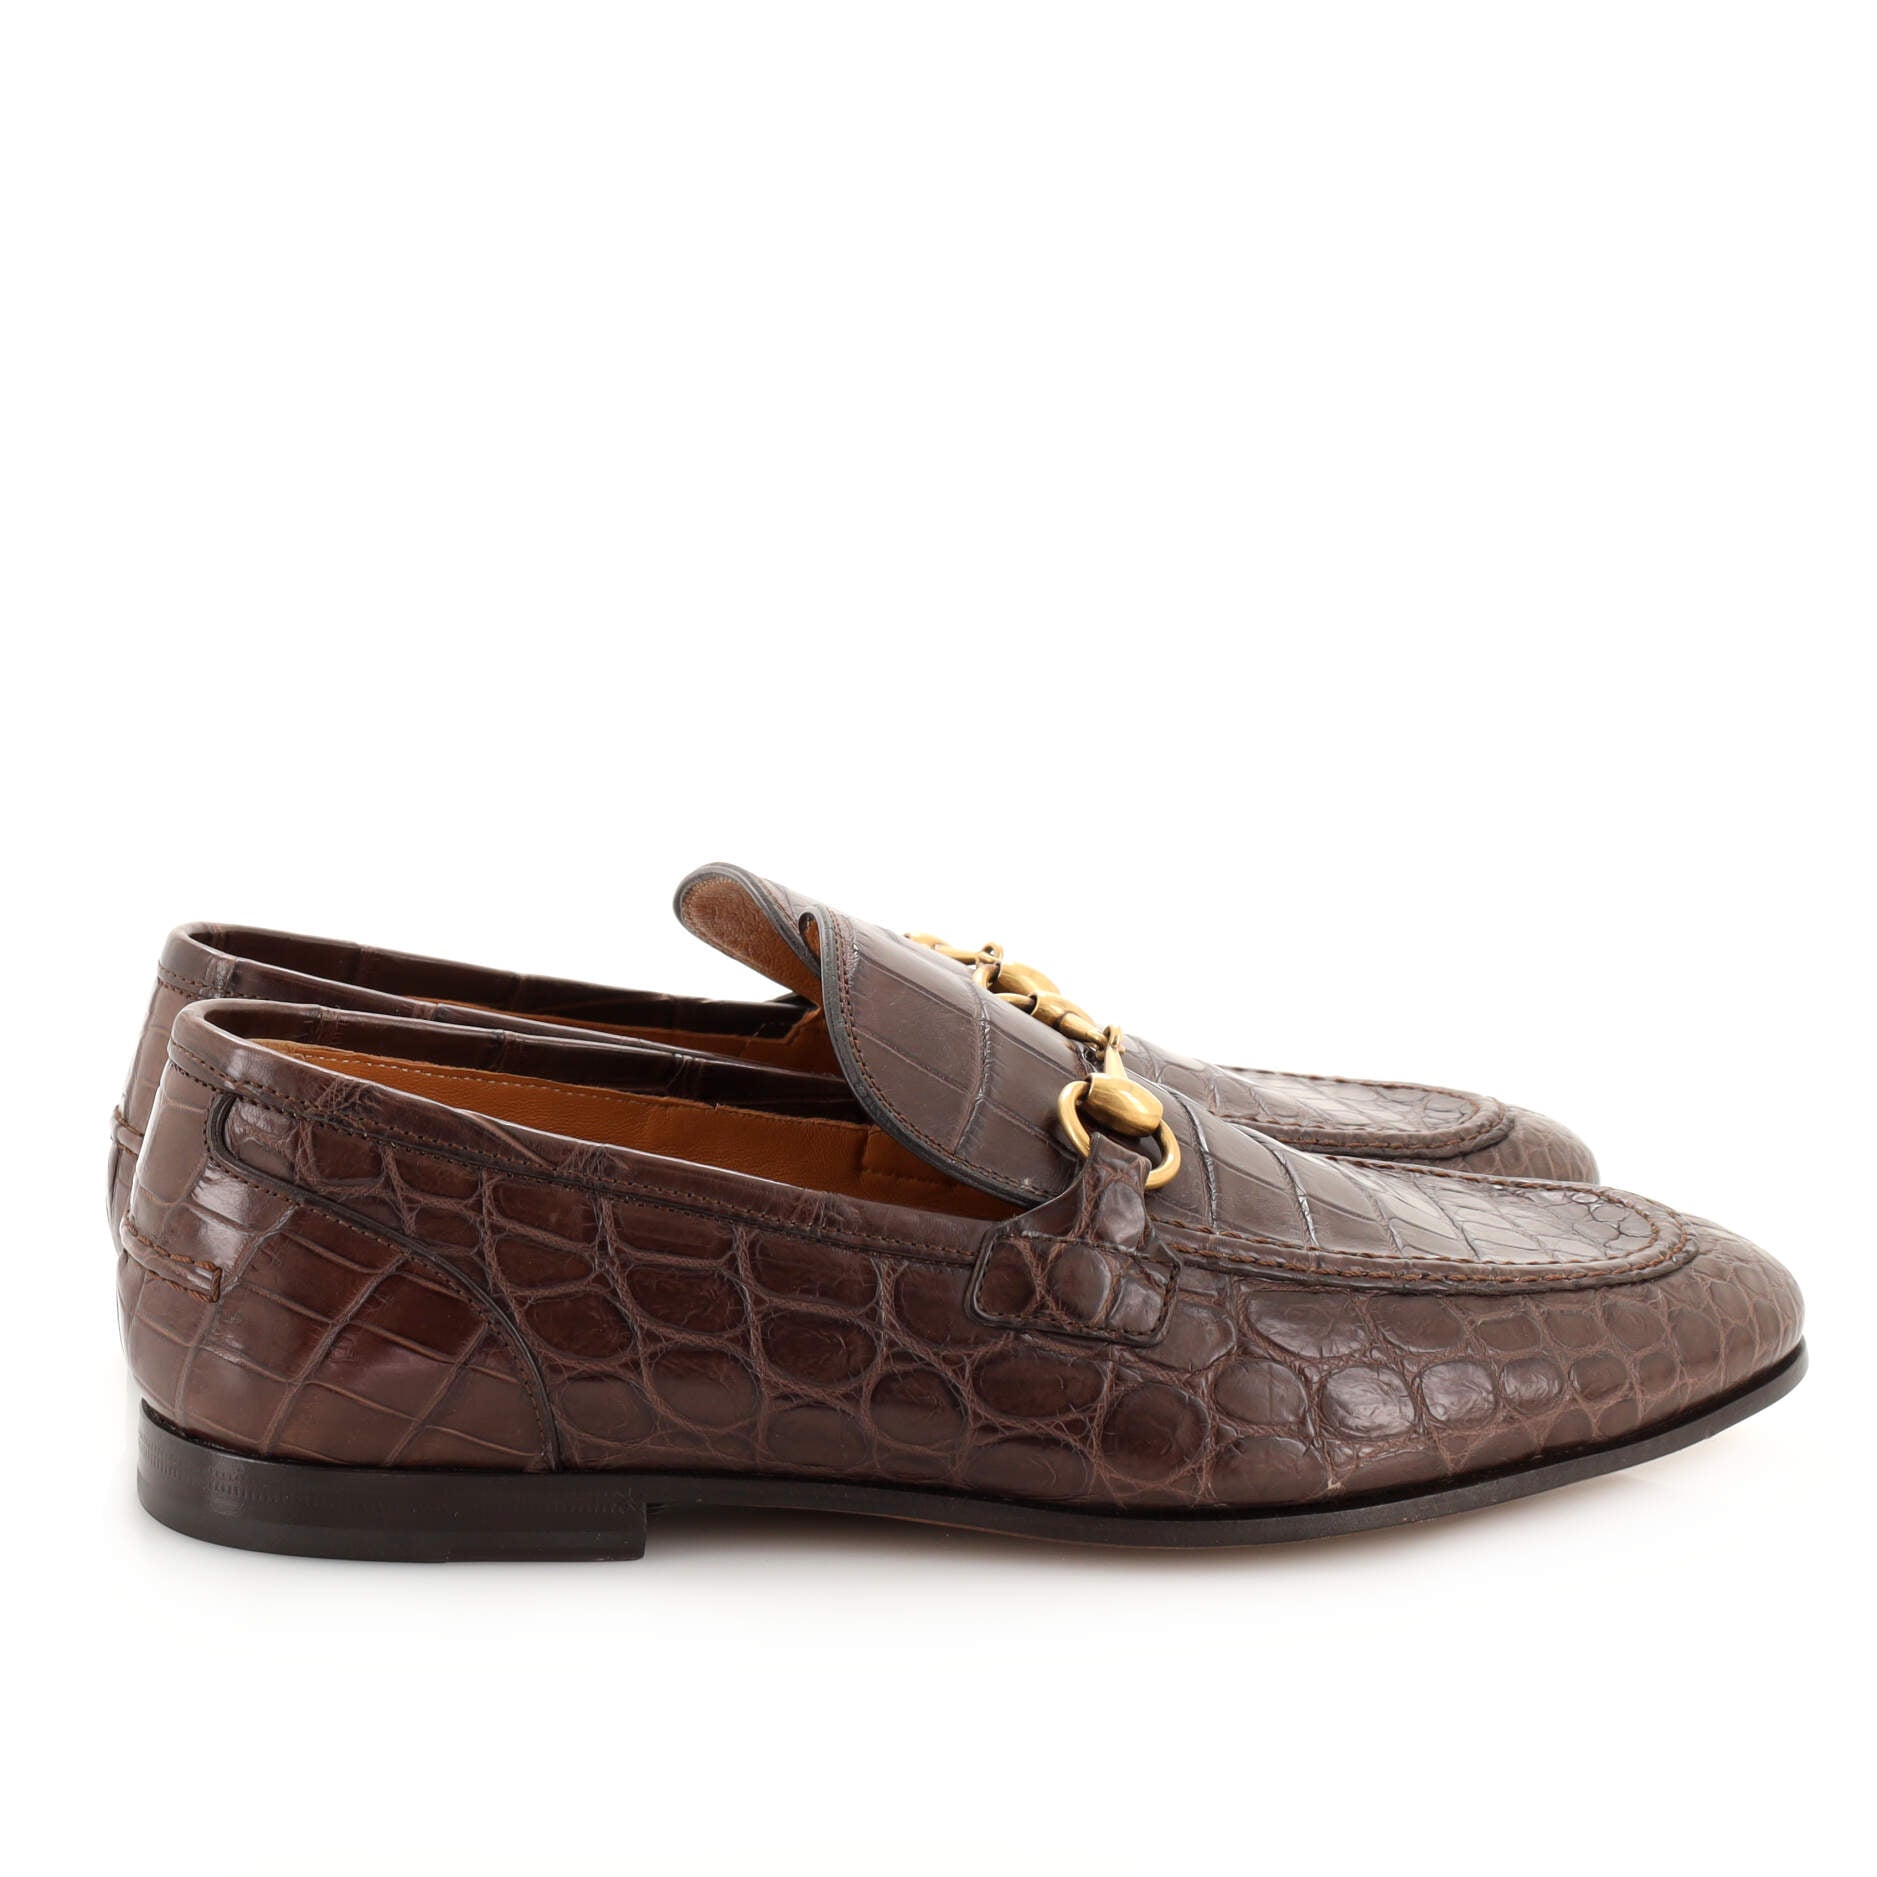 Men's Gucci Jordaan crocodile loafer